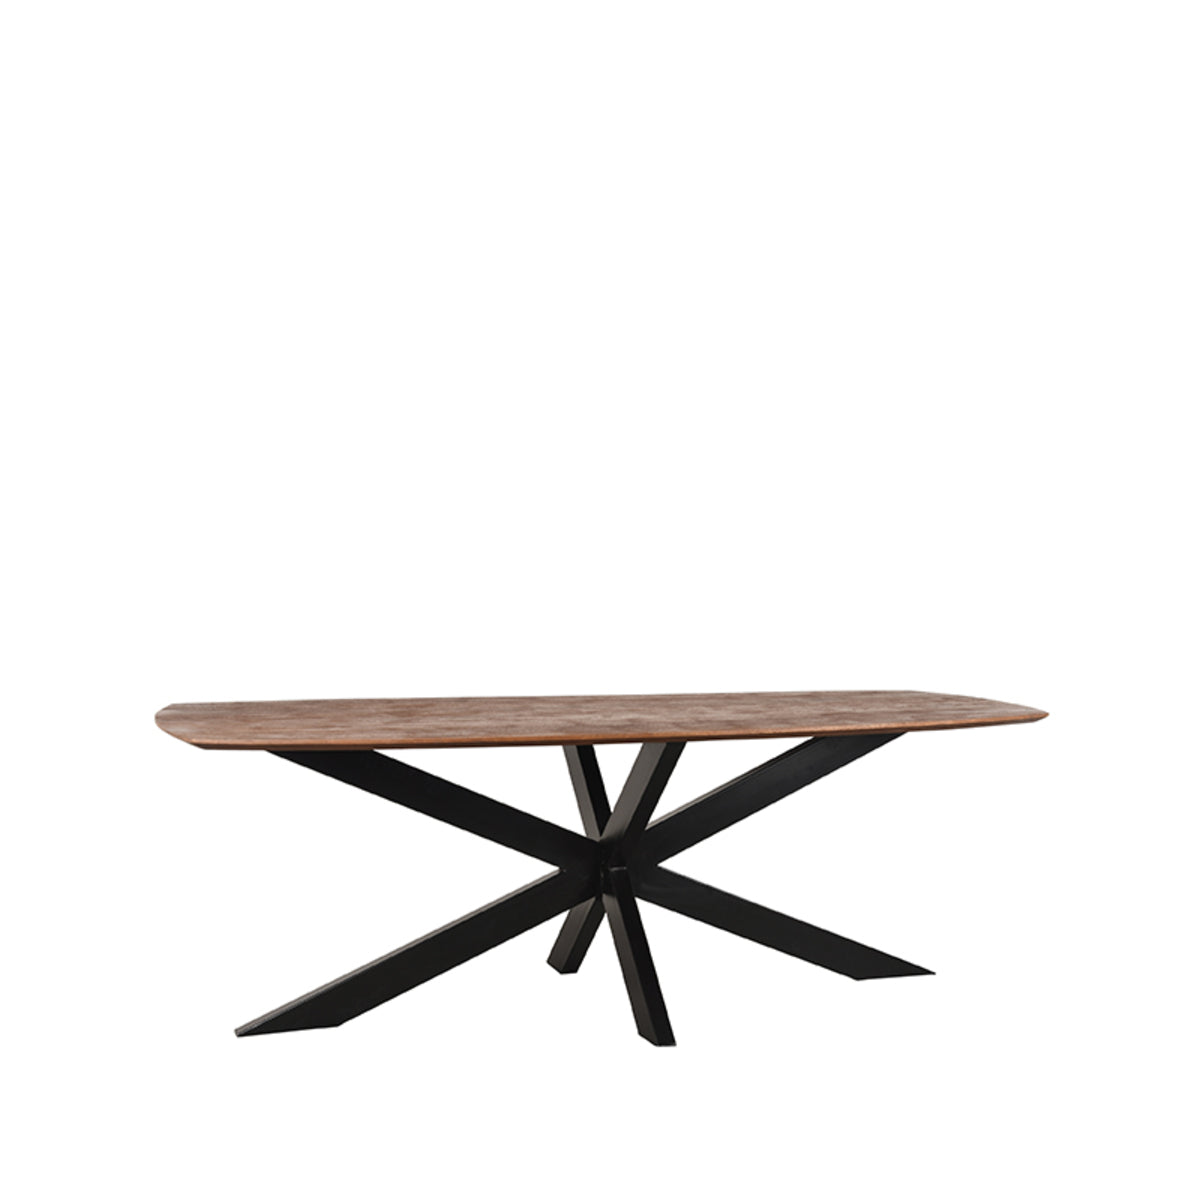 LABEL51 Dining room table Zane - Espresso - Mango wood